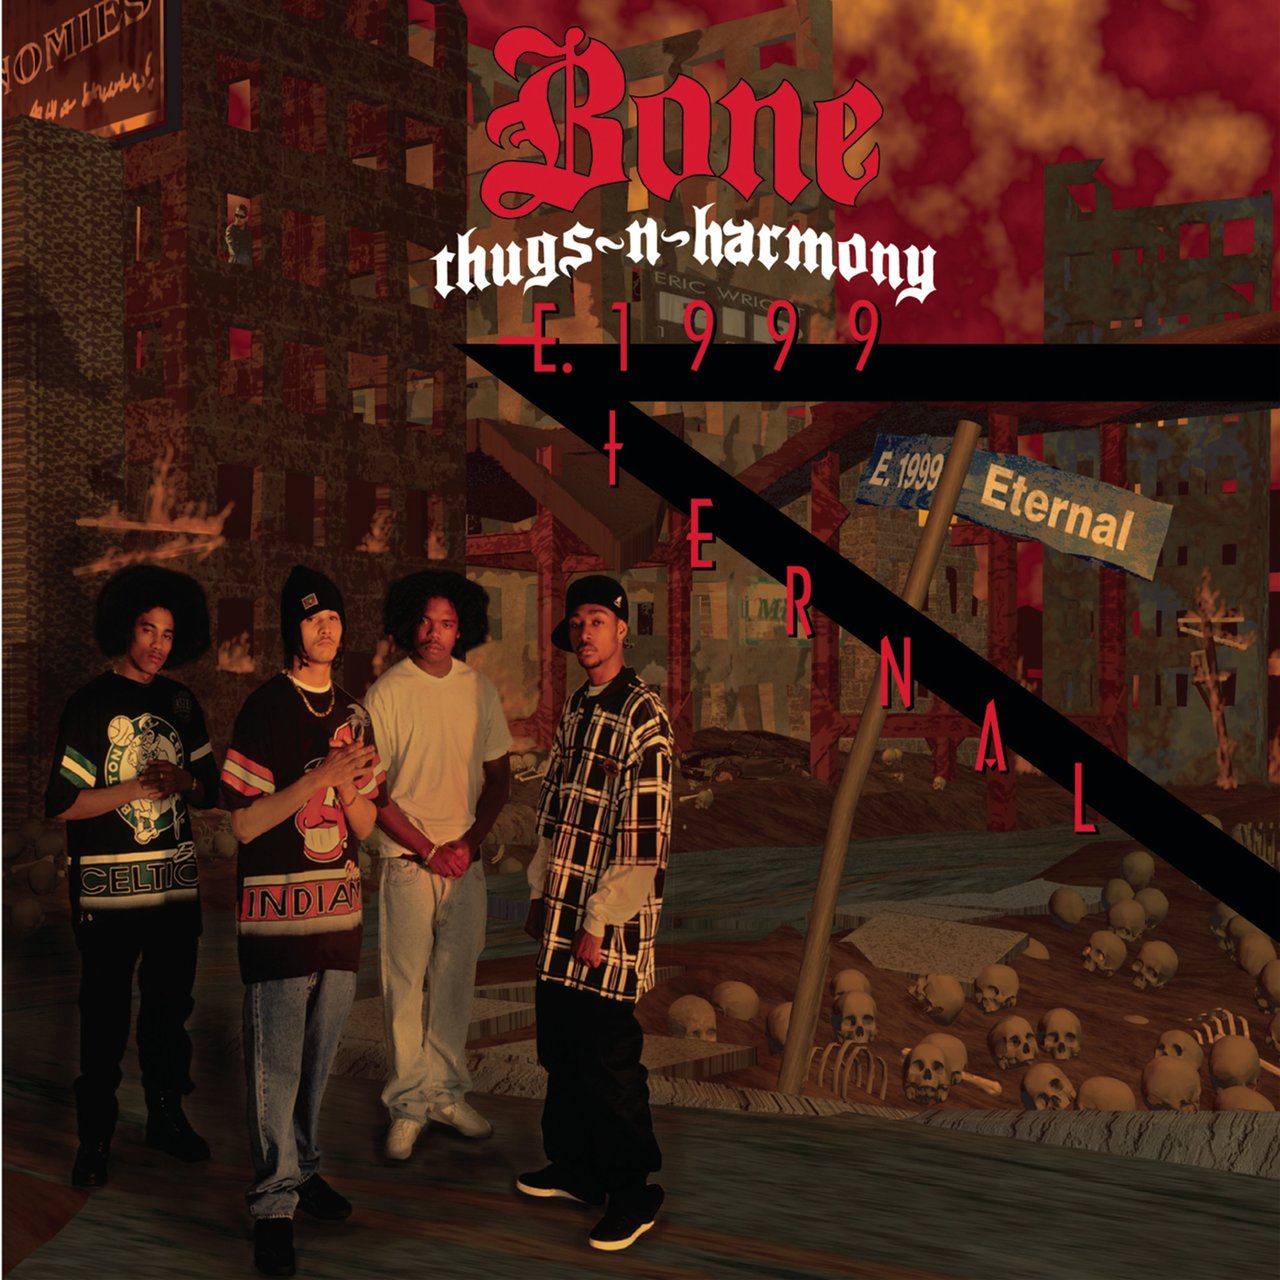 Bone Thugs-N-Harmony - E. 1999 Eternal (Cover)